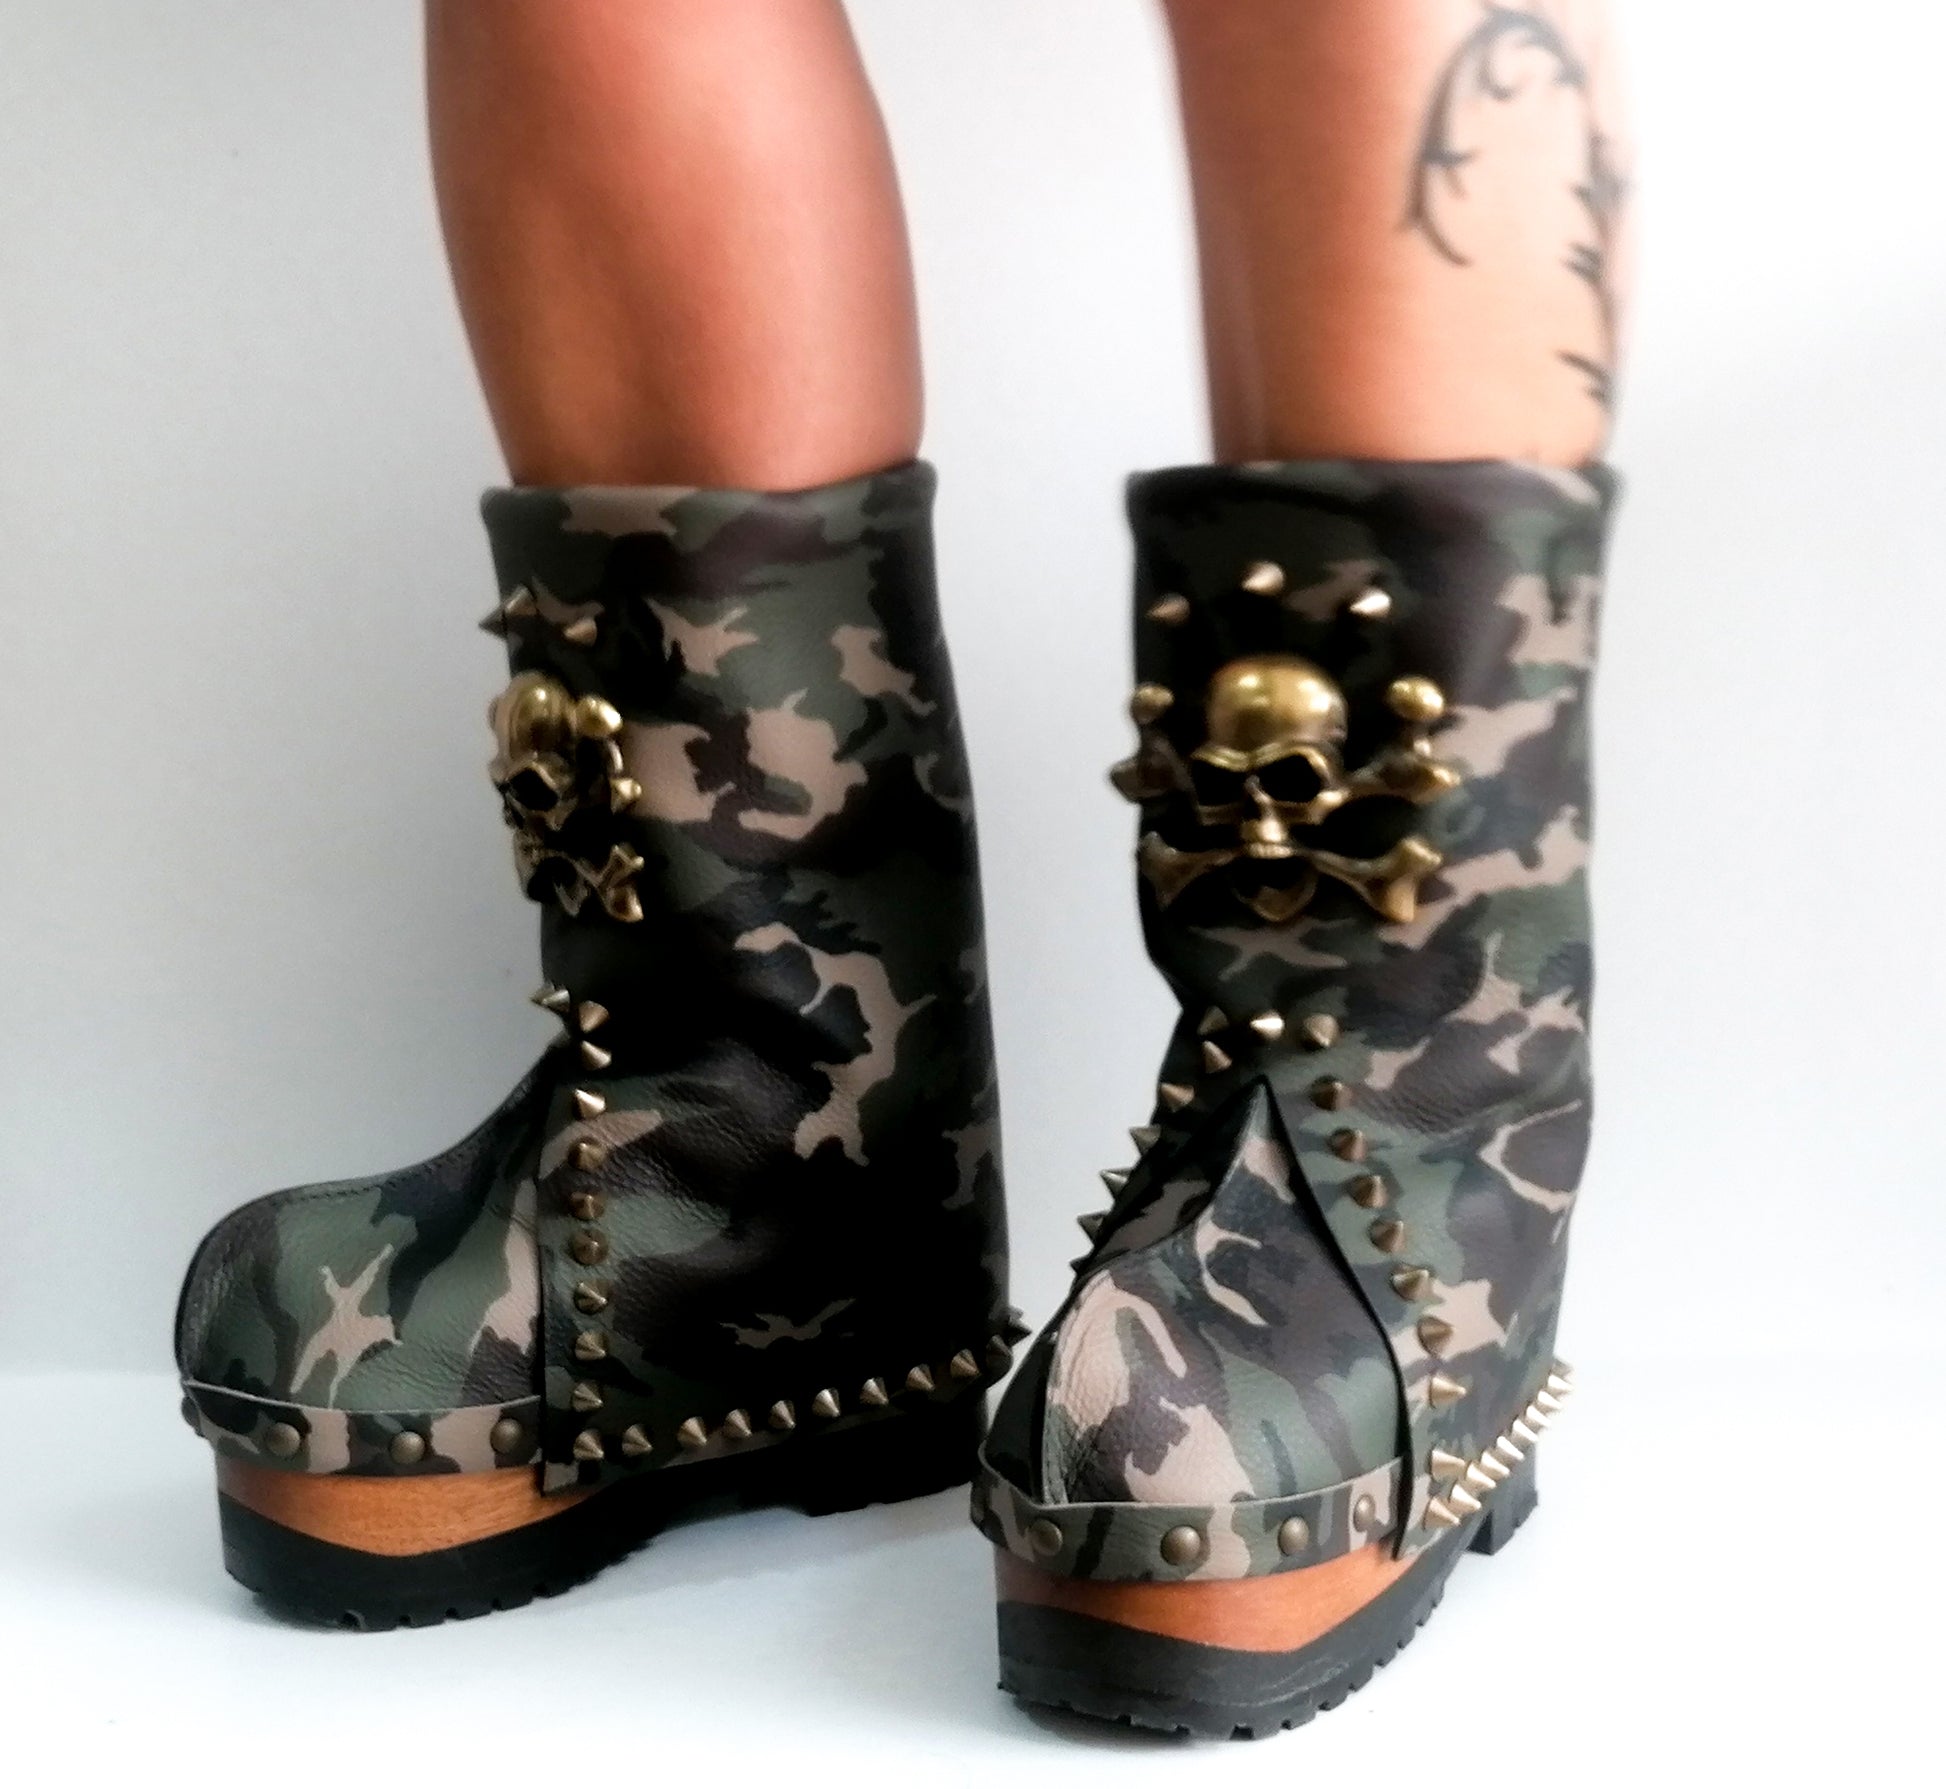 Warrior Army Boots – Sol Caleyo